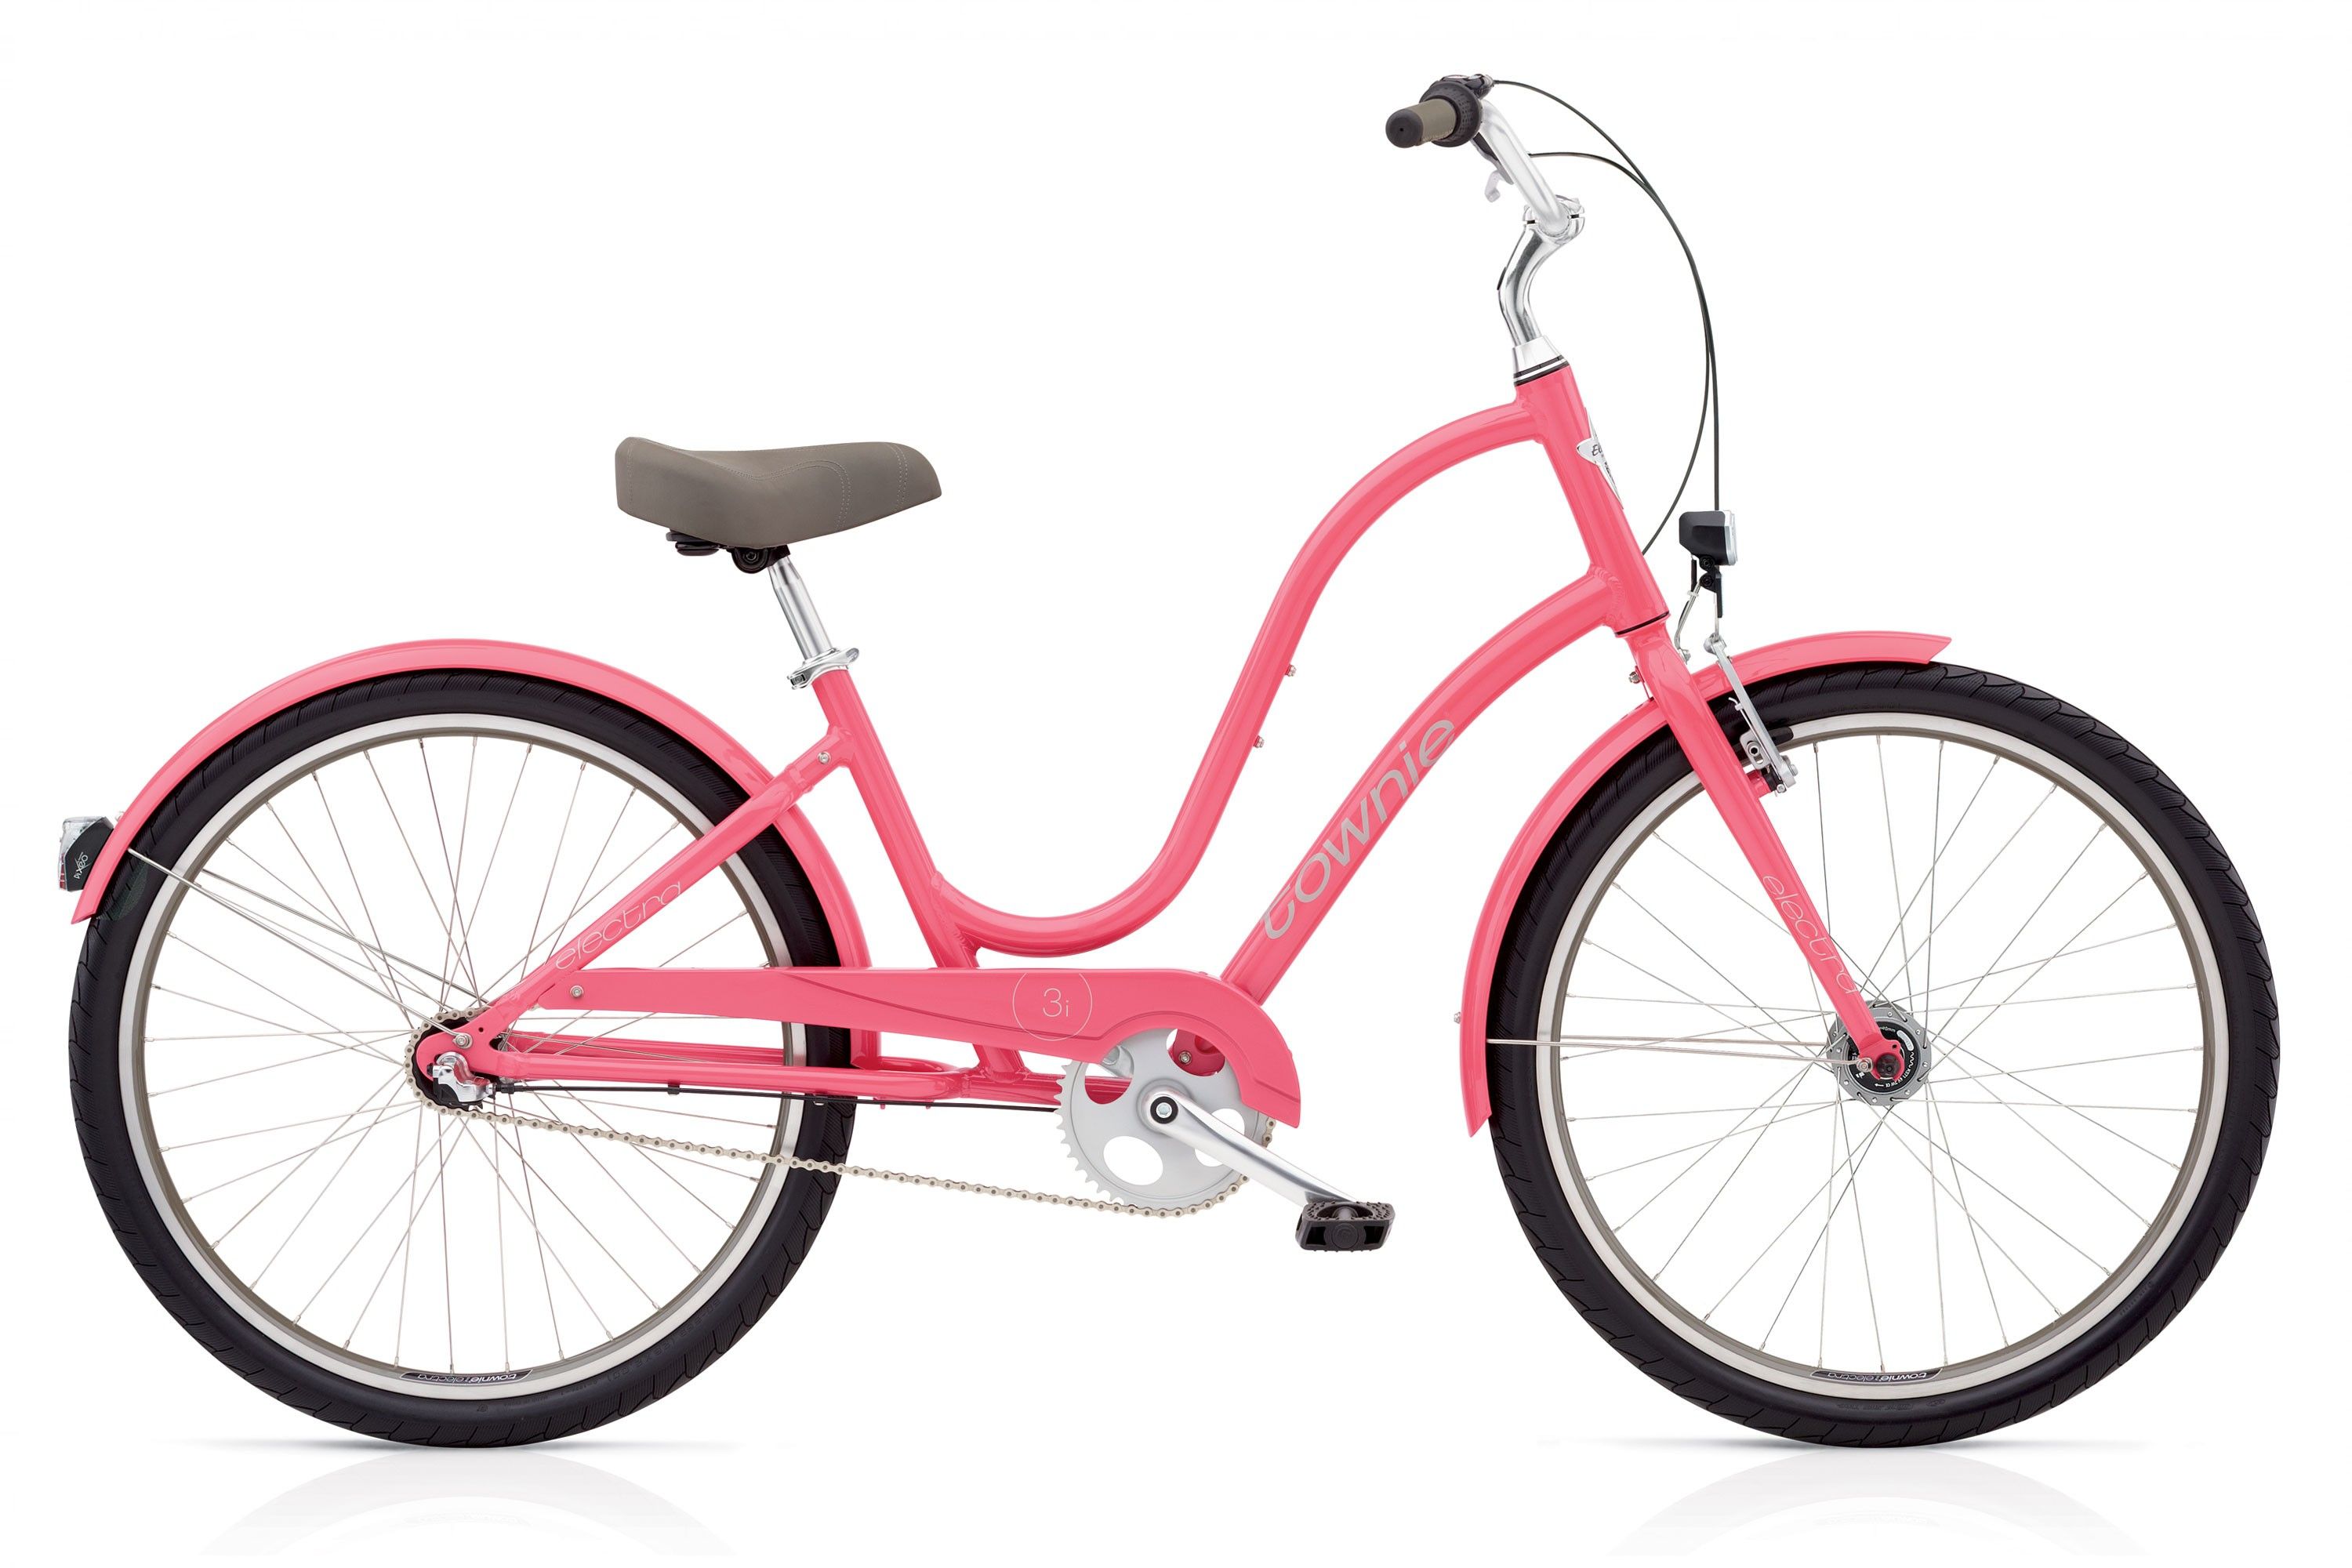  Велосипед Electra Townie Original 3i EQ Ladies 2017